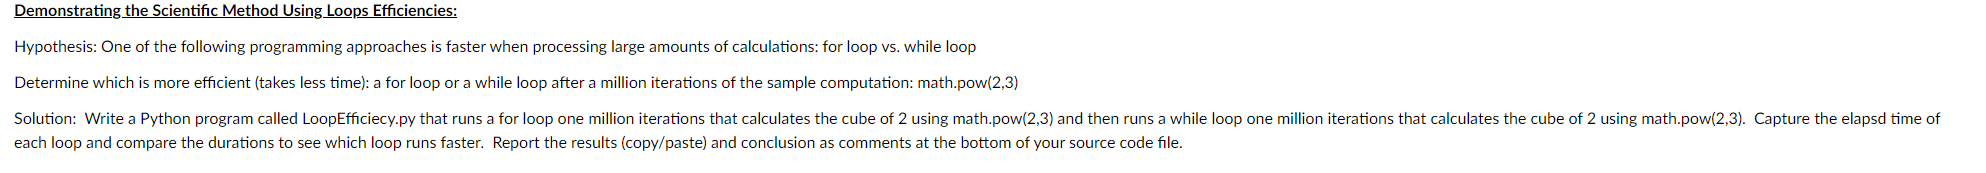 Demonstrating the Scientific Method Using Loops Efficiencies: Hypothesis: One of the following programming